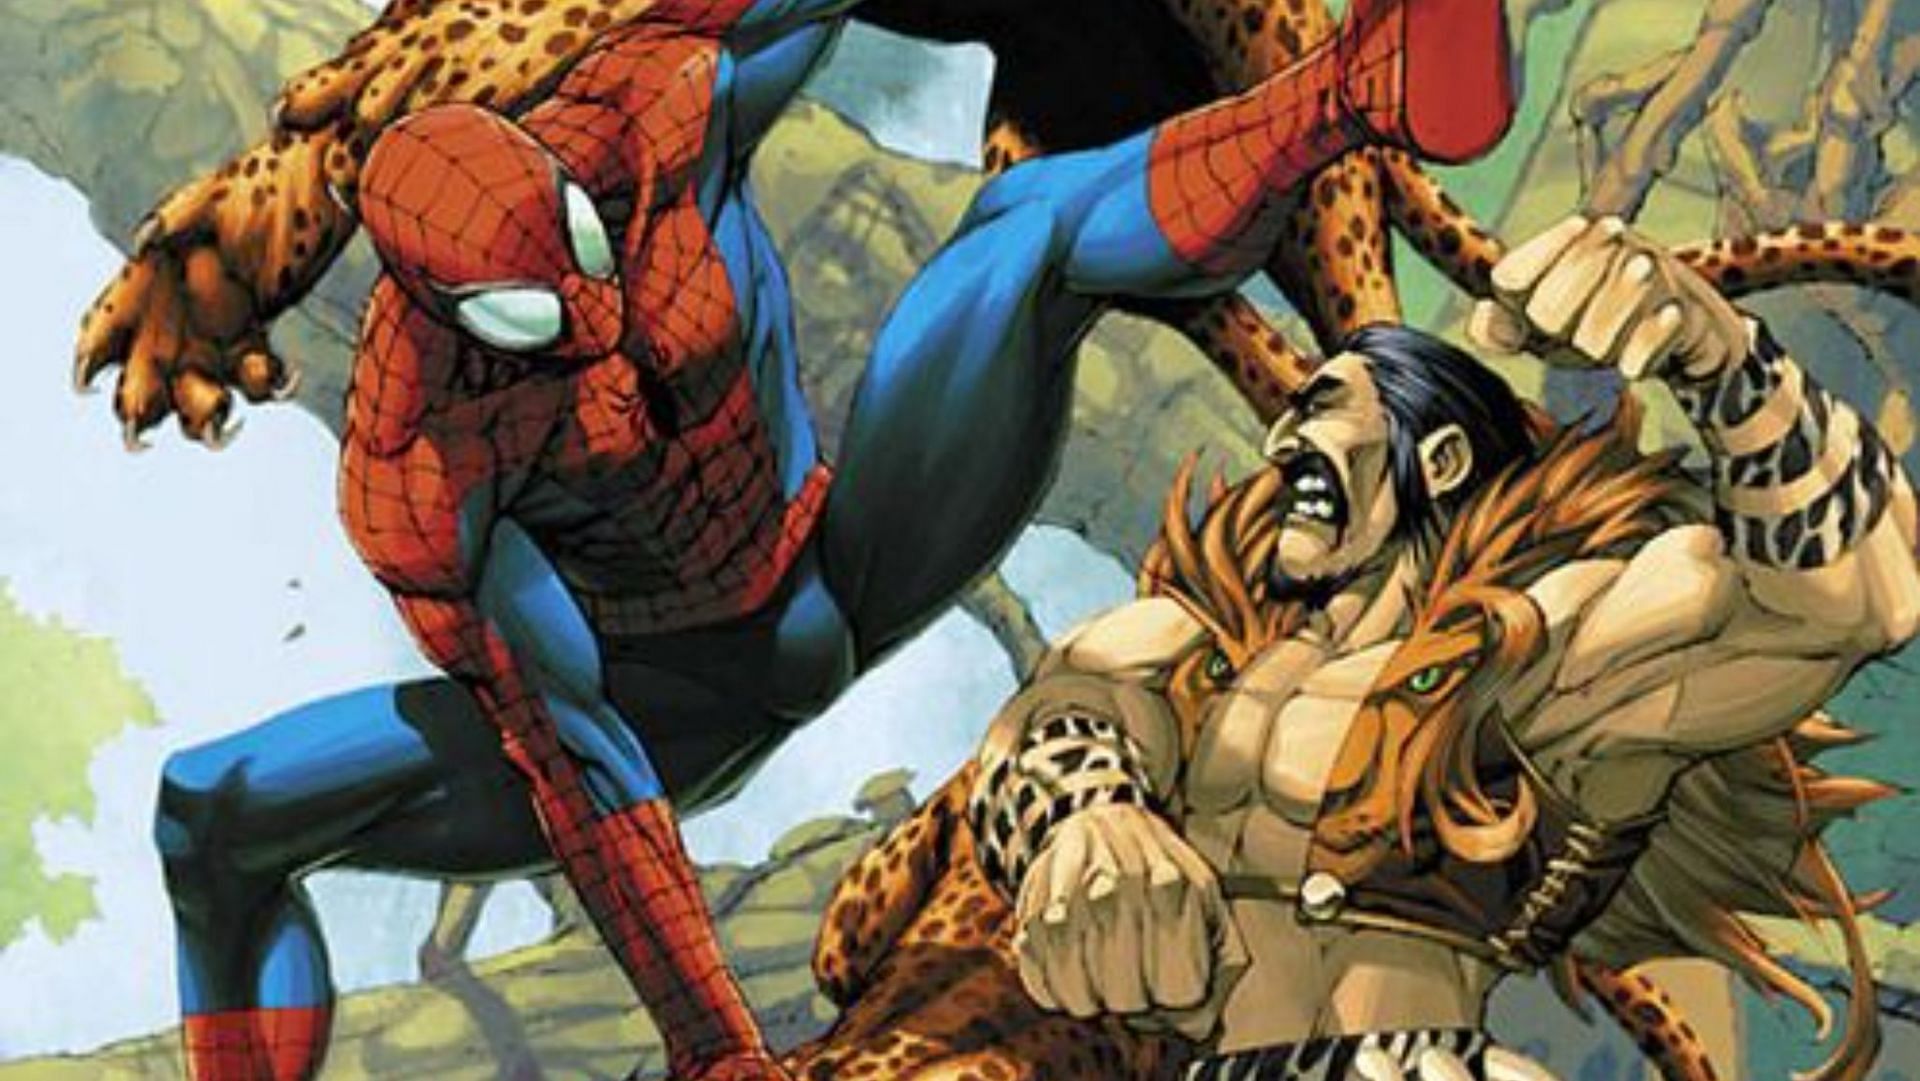 Web-slinger on the horizon: Is Spider-Man swinging into Kraven the Hunter? (Image via Marvel Comics)